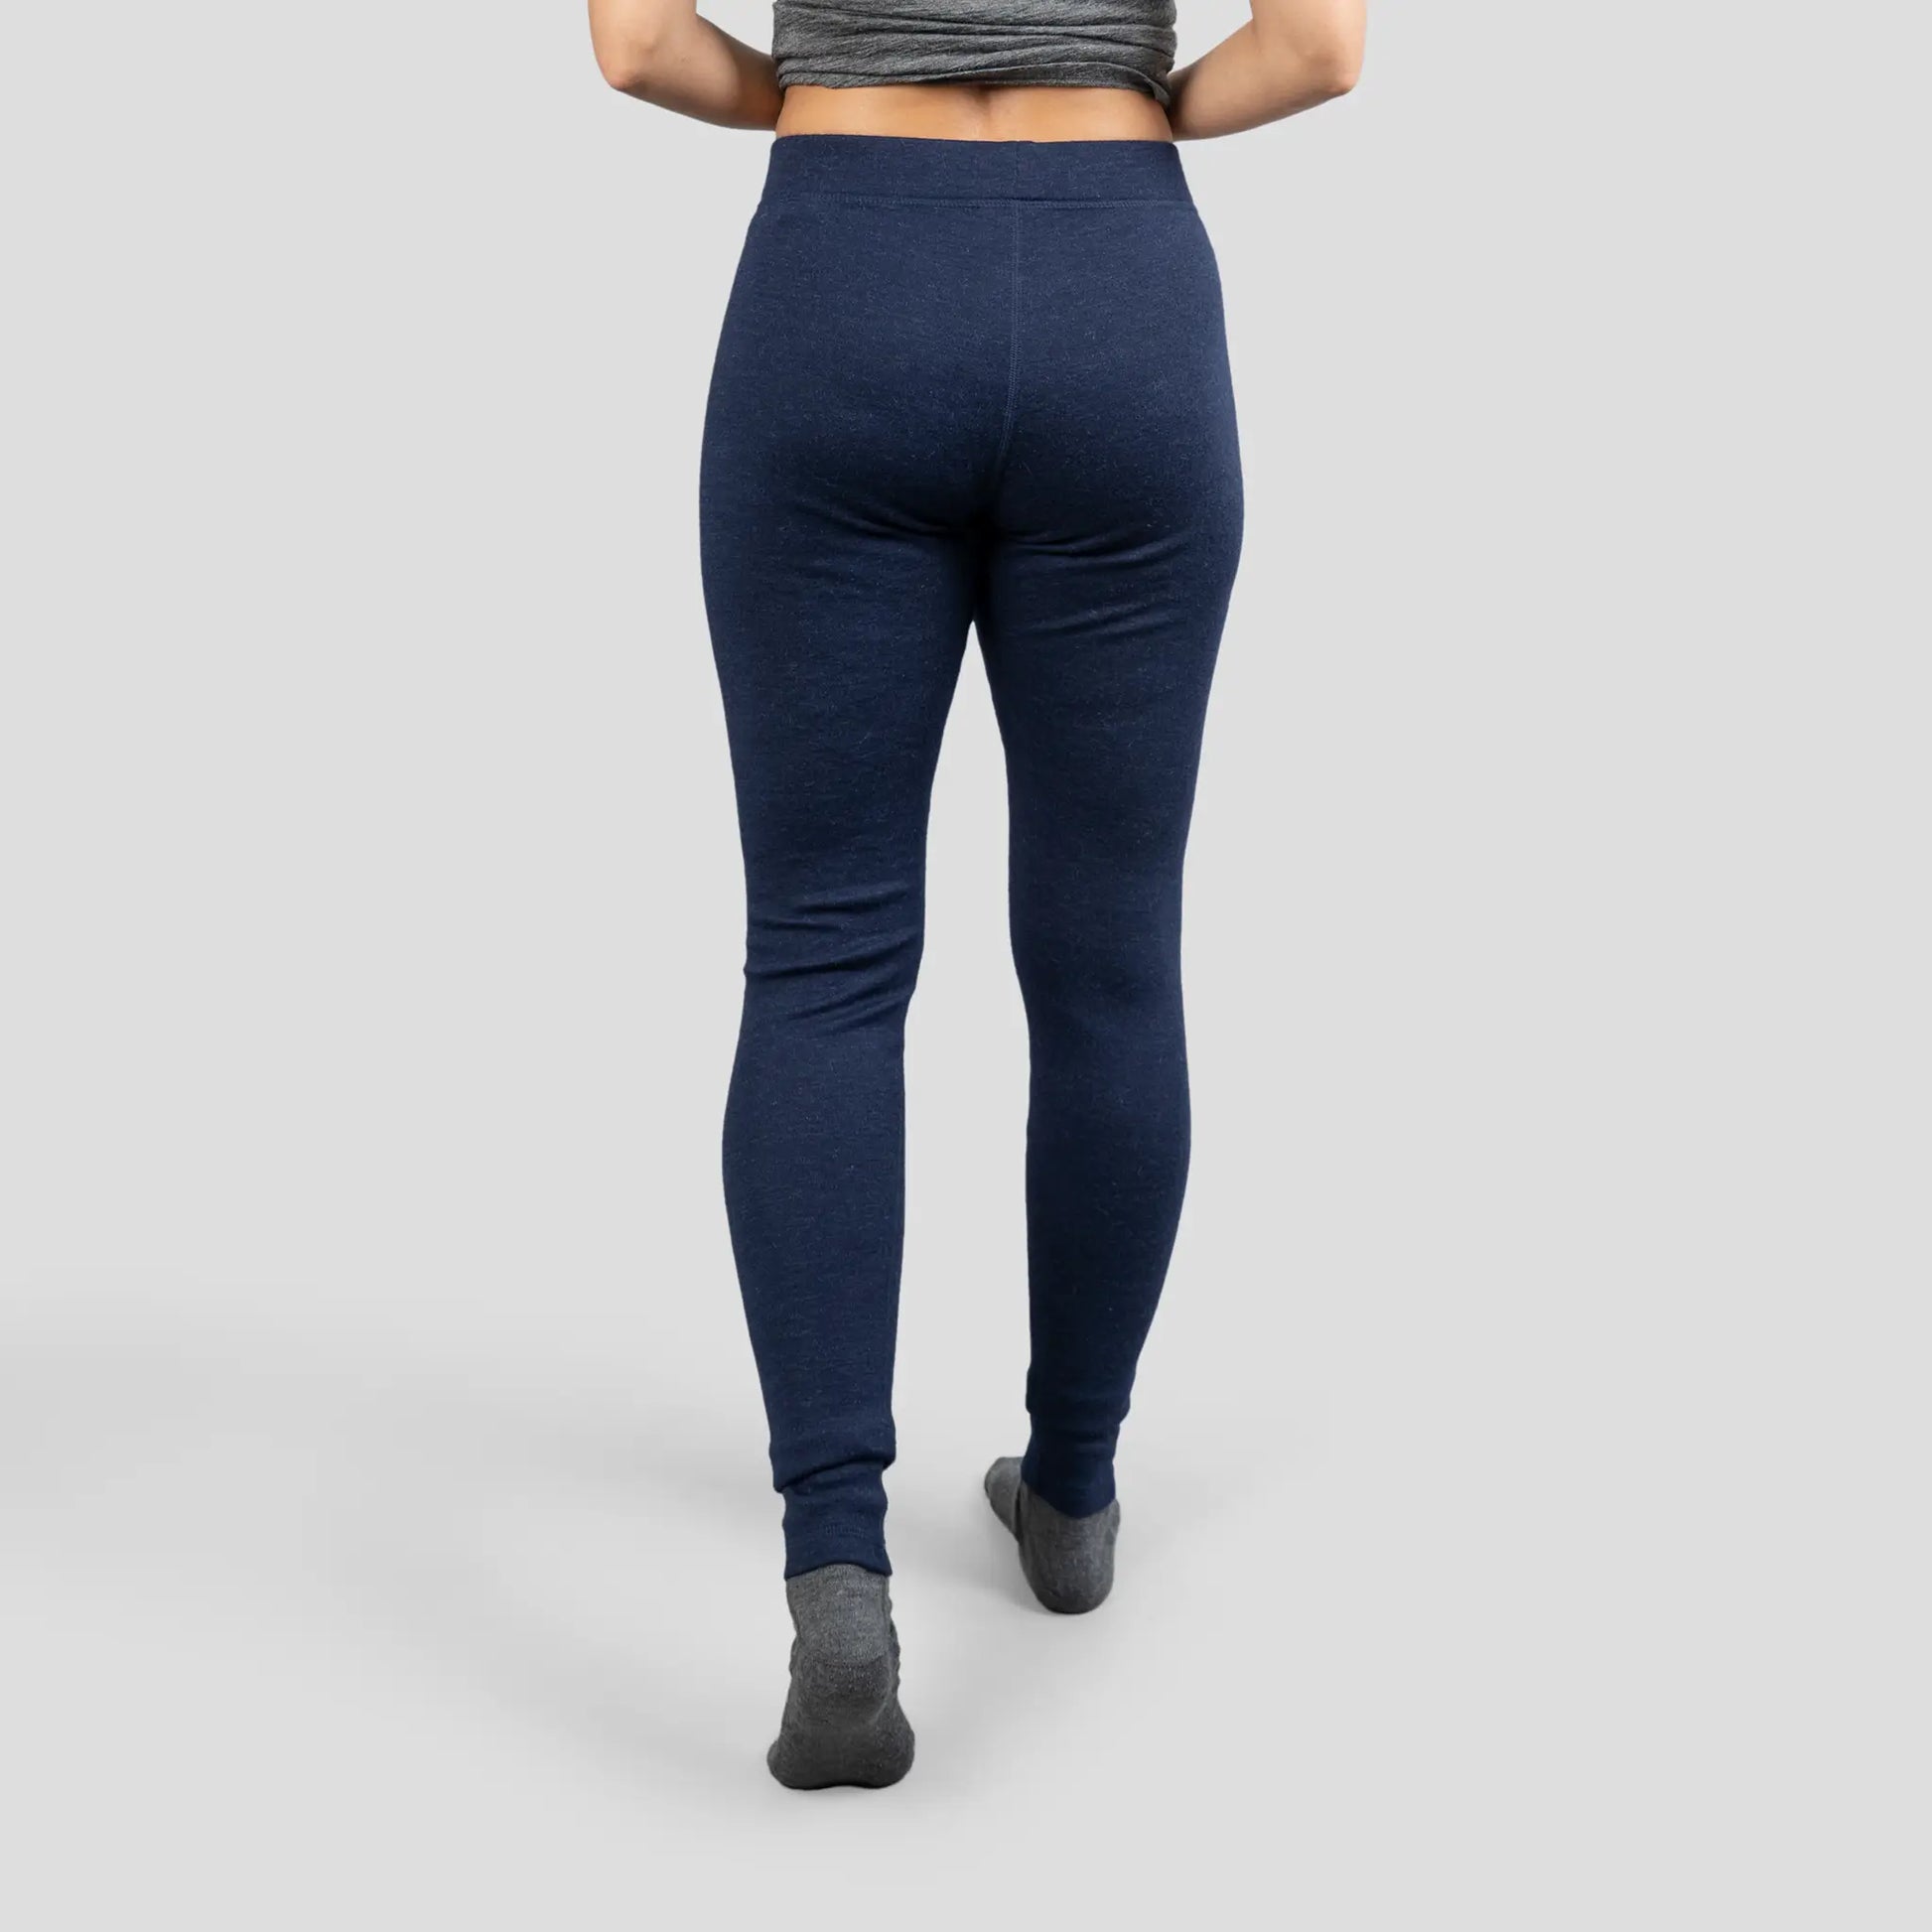 womens commfortale fit leggings lightweight color navy blue